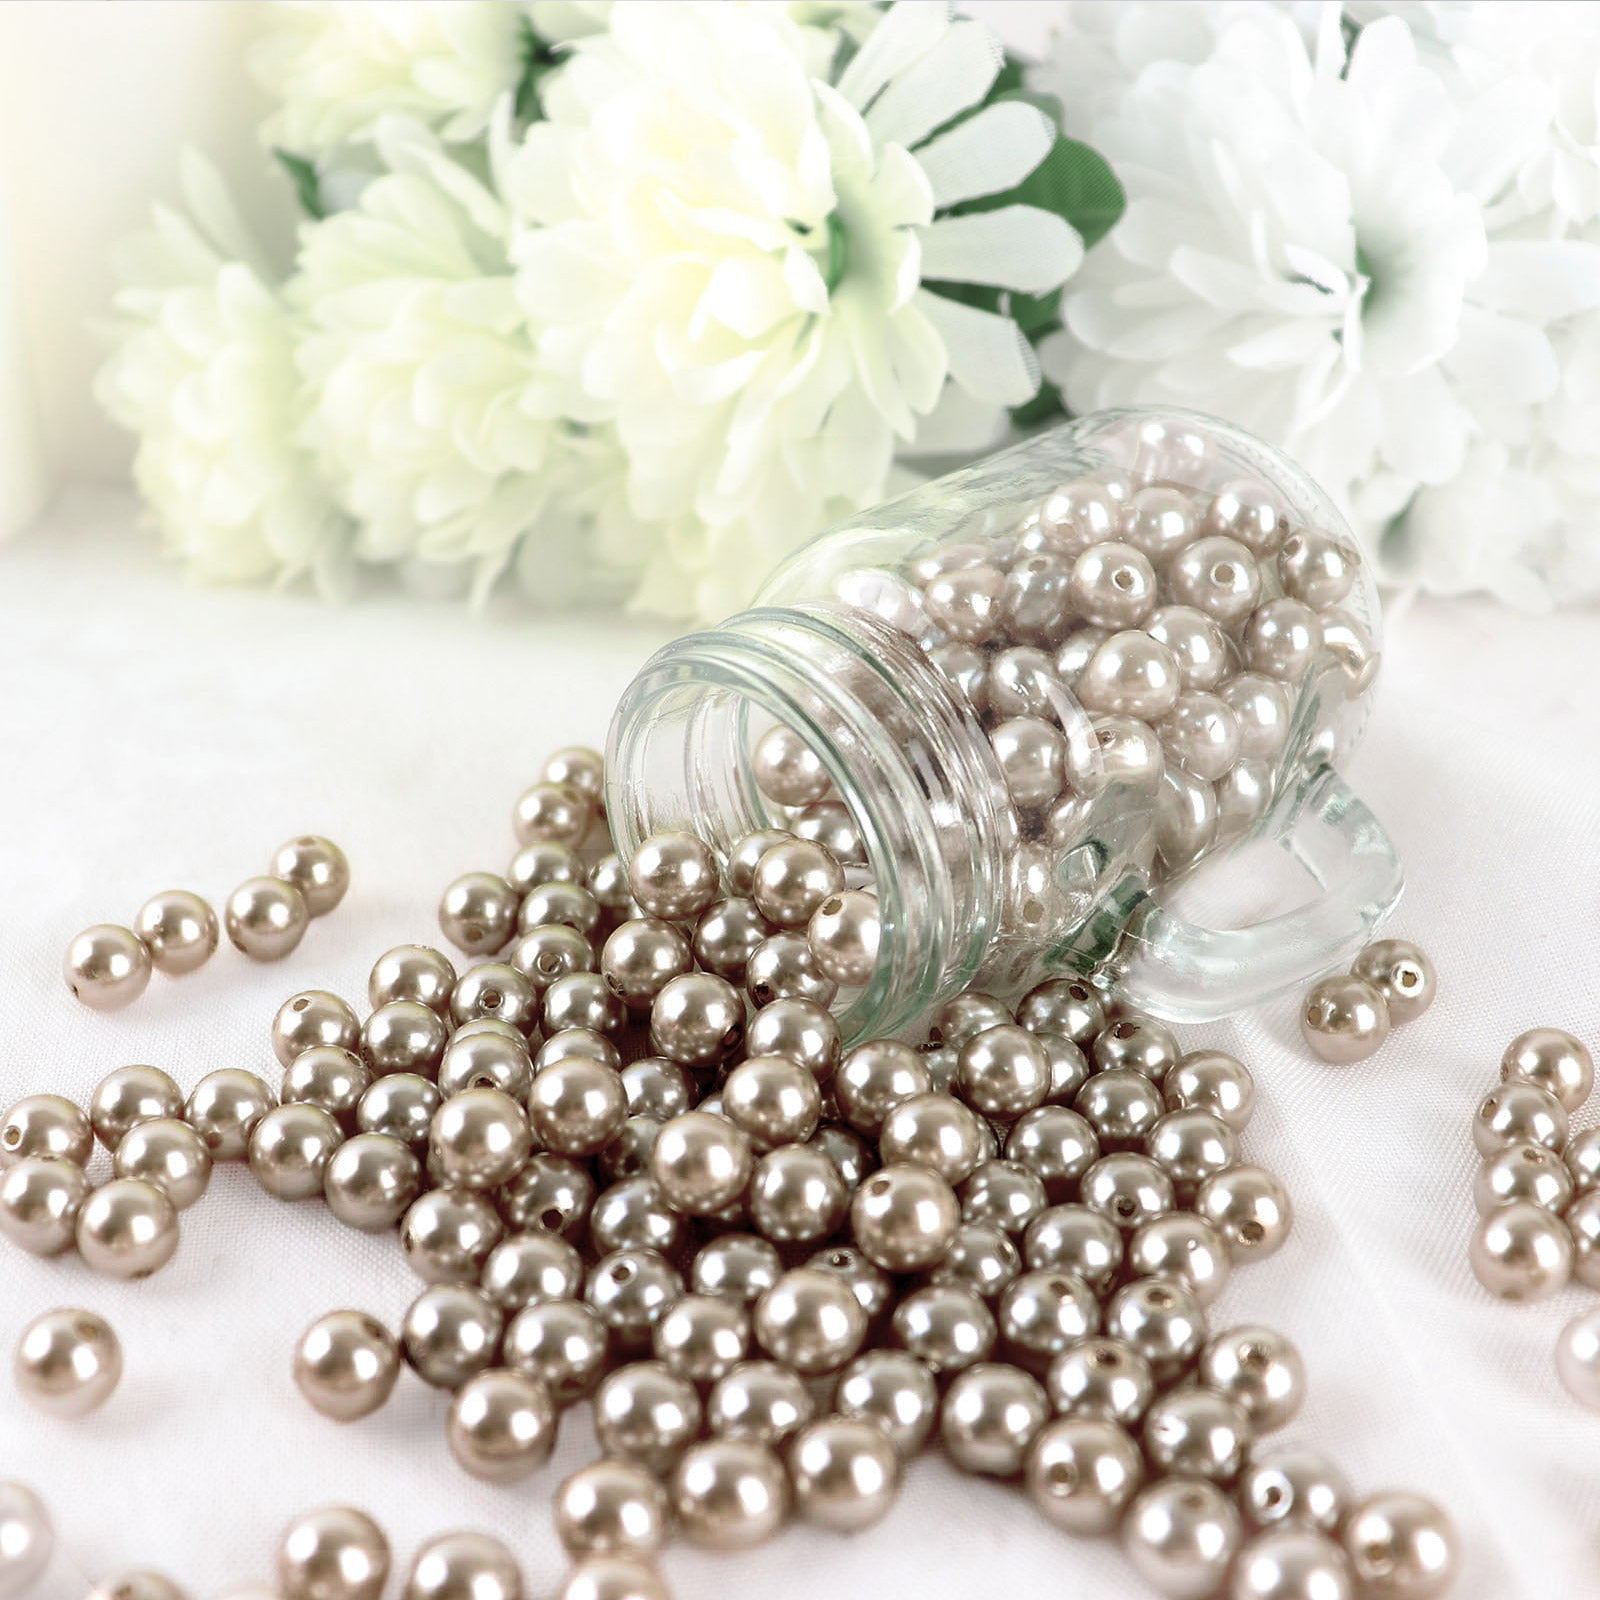 10x perles plastique Rondes 10mm ASSORTIMENT PASTEL - Perles résine -  Creavea